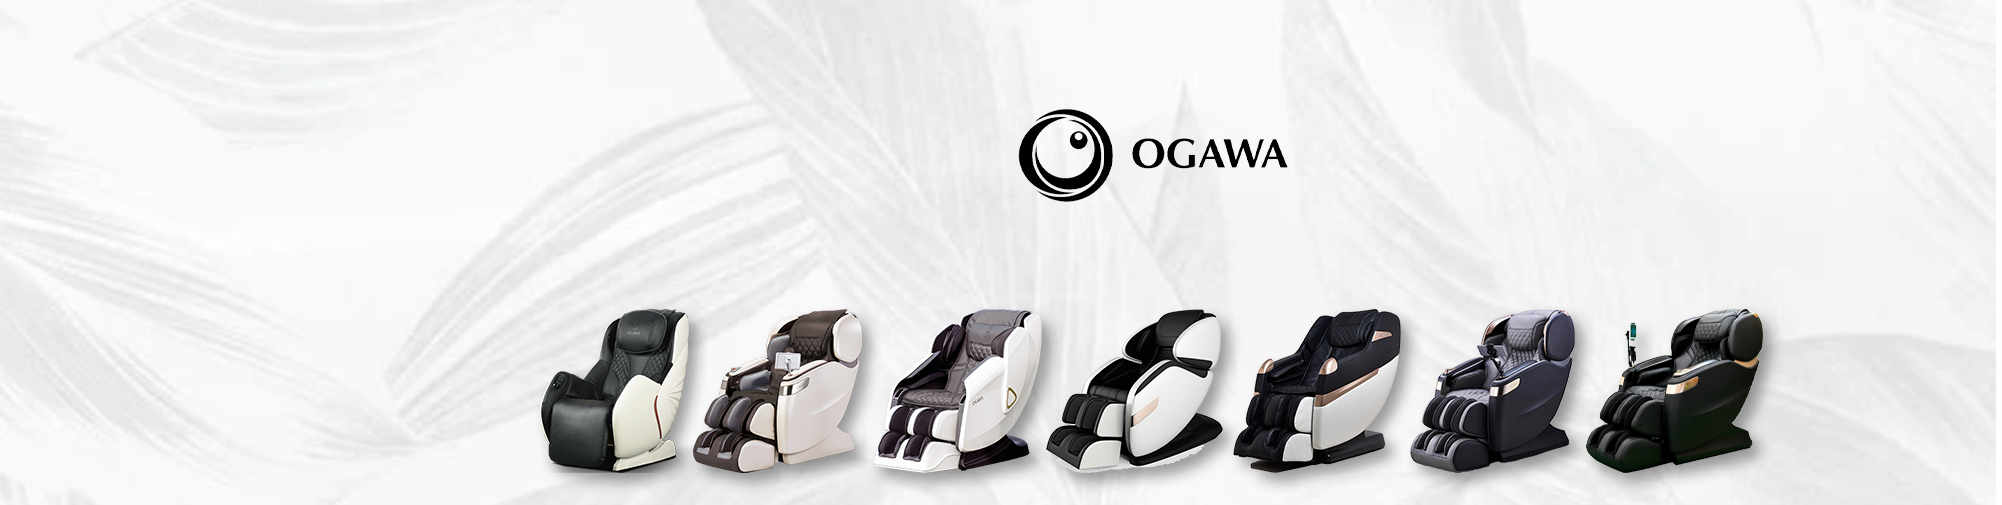 OGAWA | 按摩椅世界